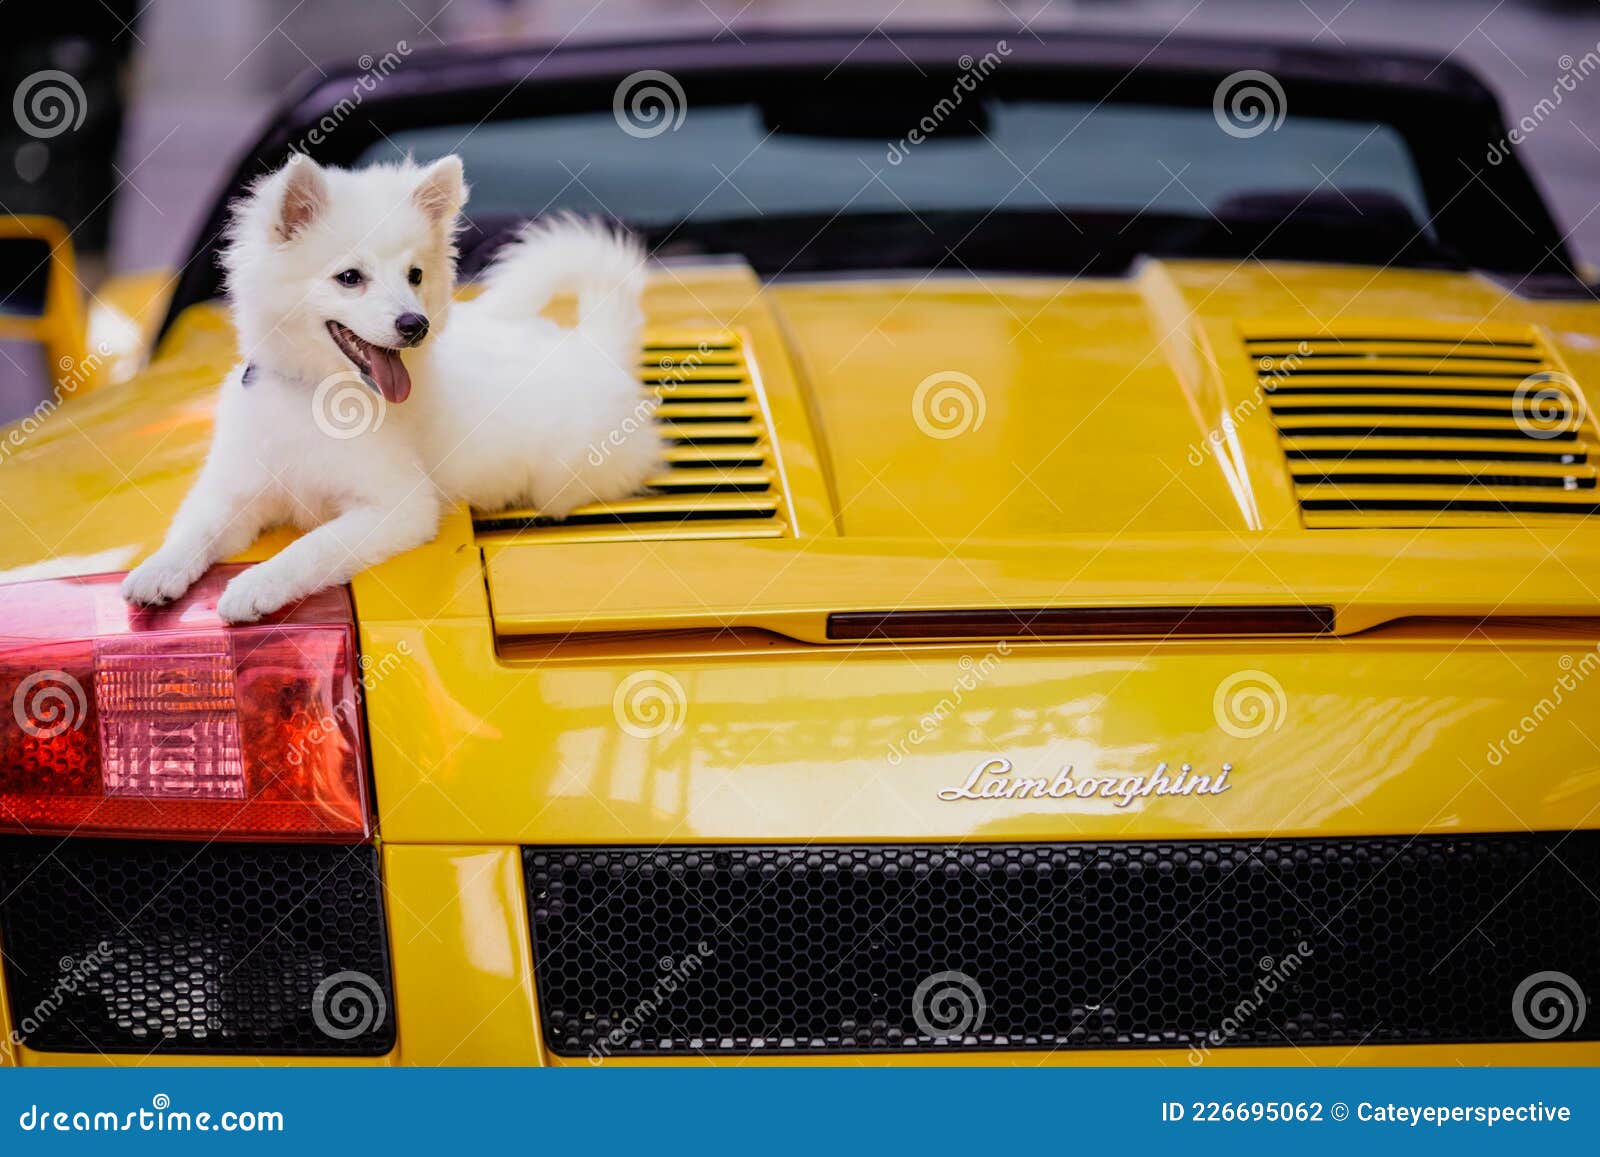 Belang Verdampen Alert Small White Dog on Top of a Yellow Convertible Lamborghini Sports Car  Editorial Photography - Image of lamborghini, automotive: 226695062